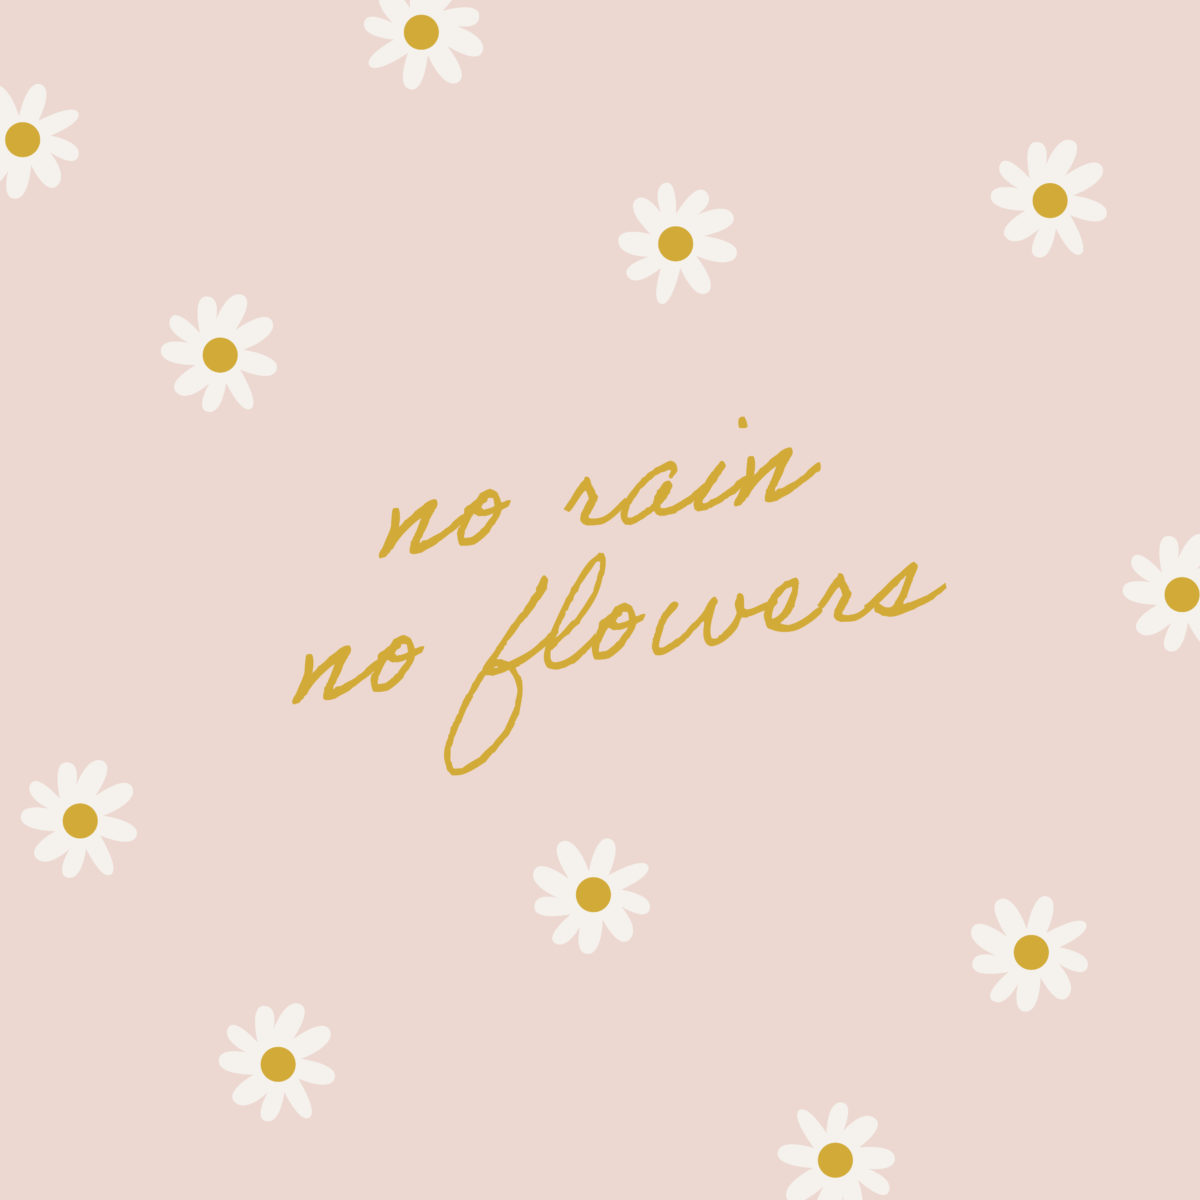 free phone quote background - no rain, no flowers